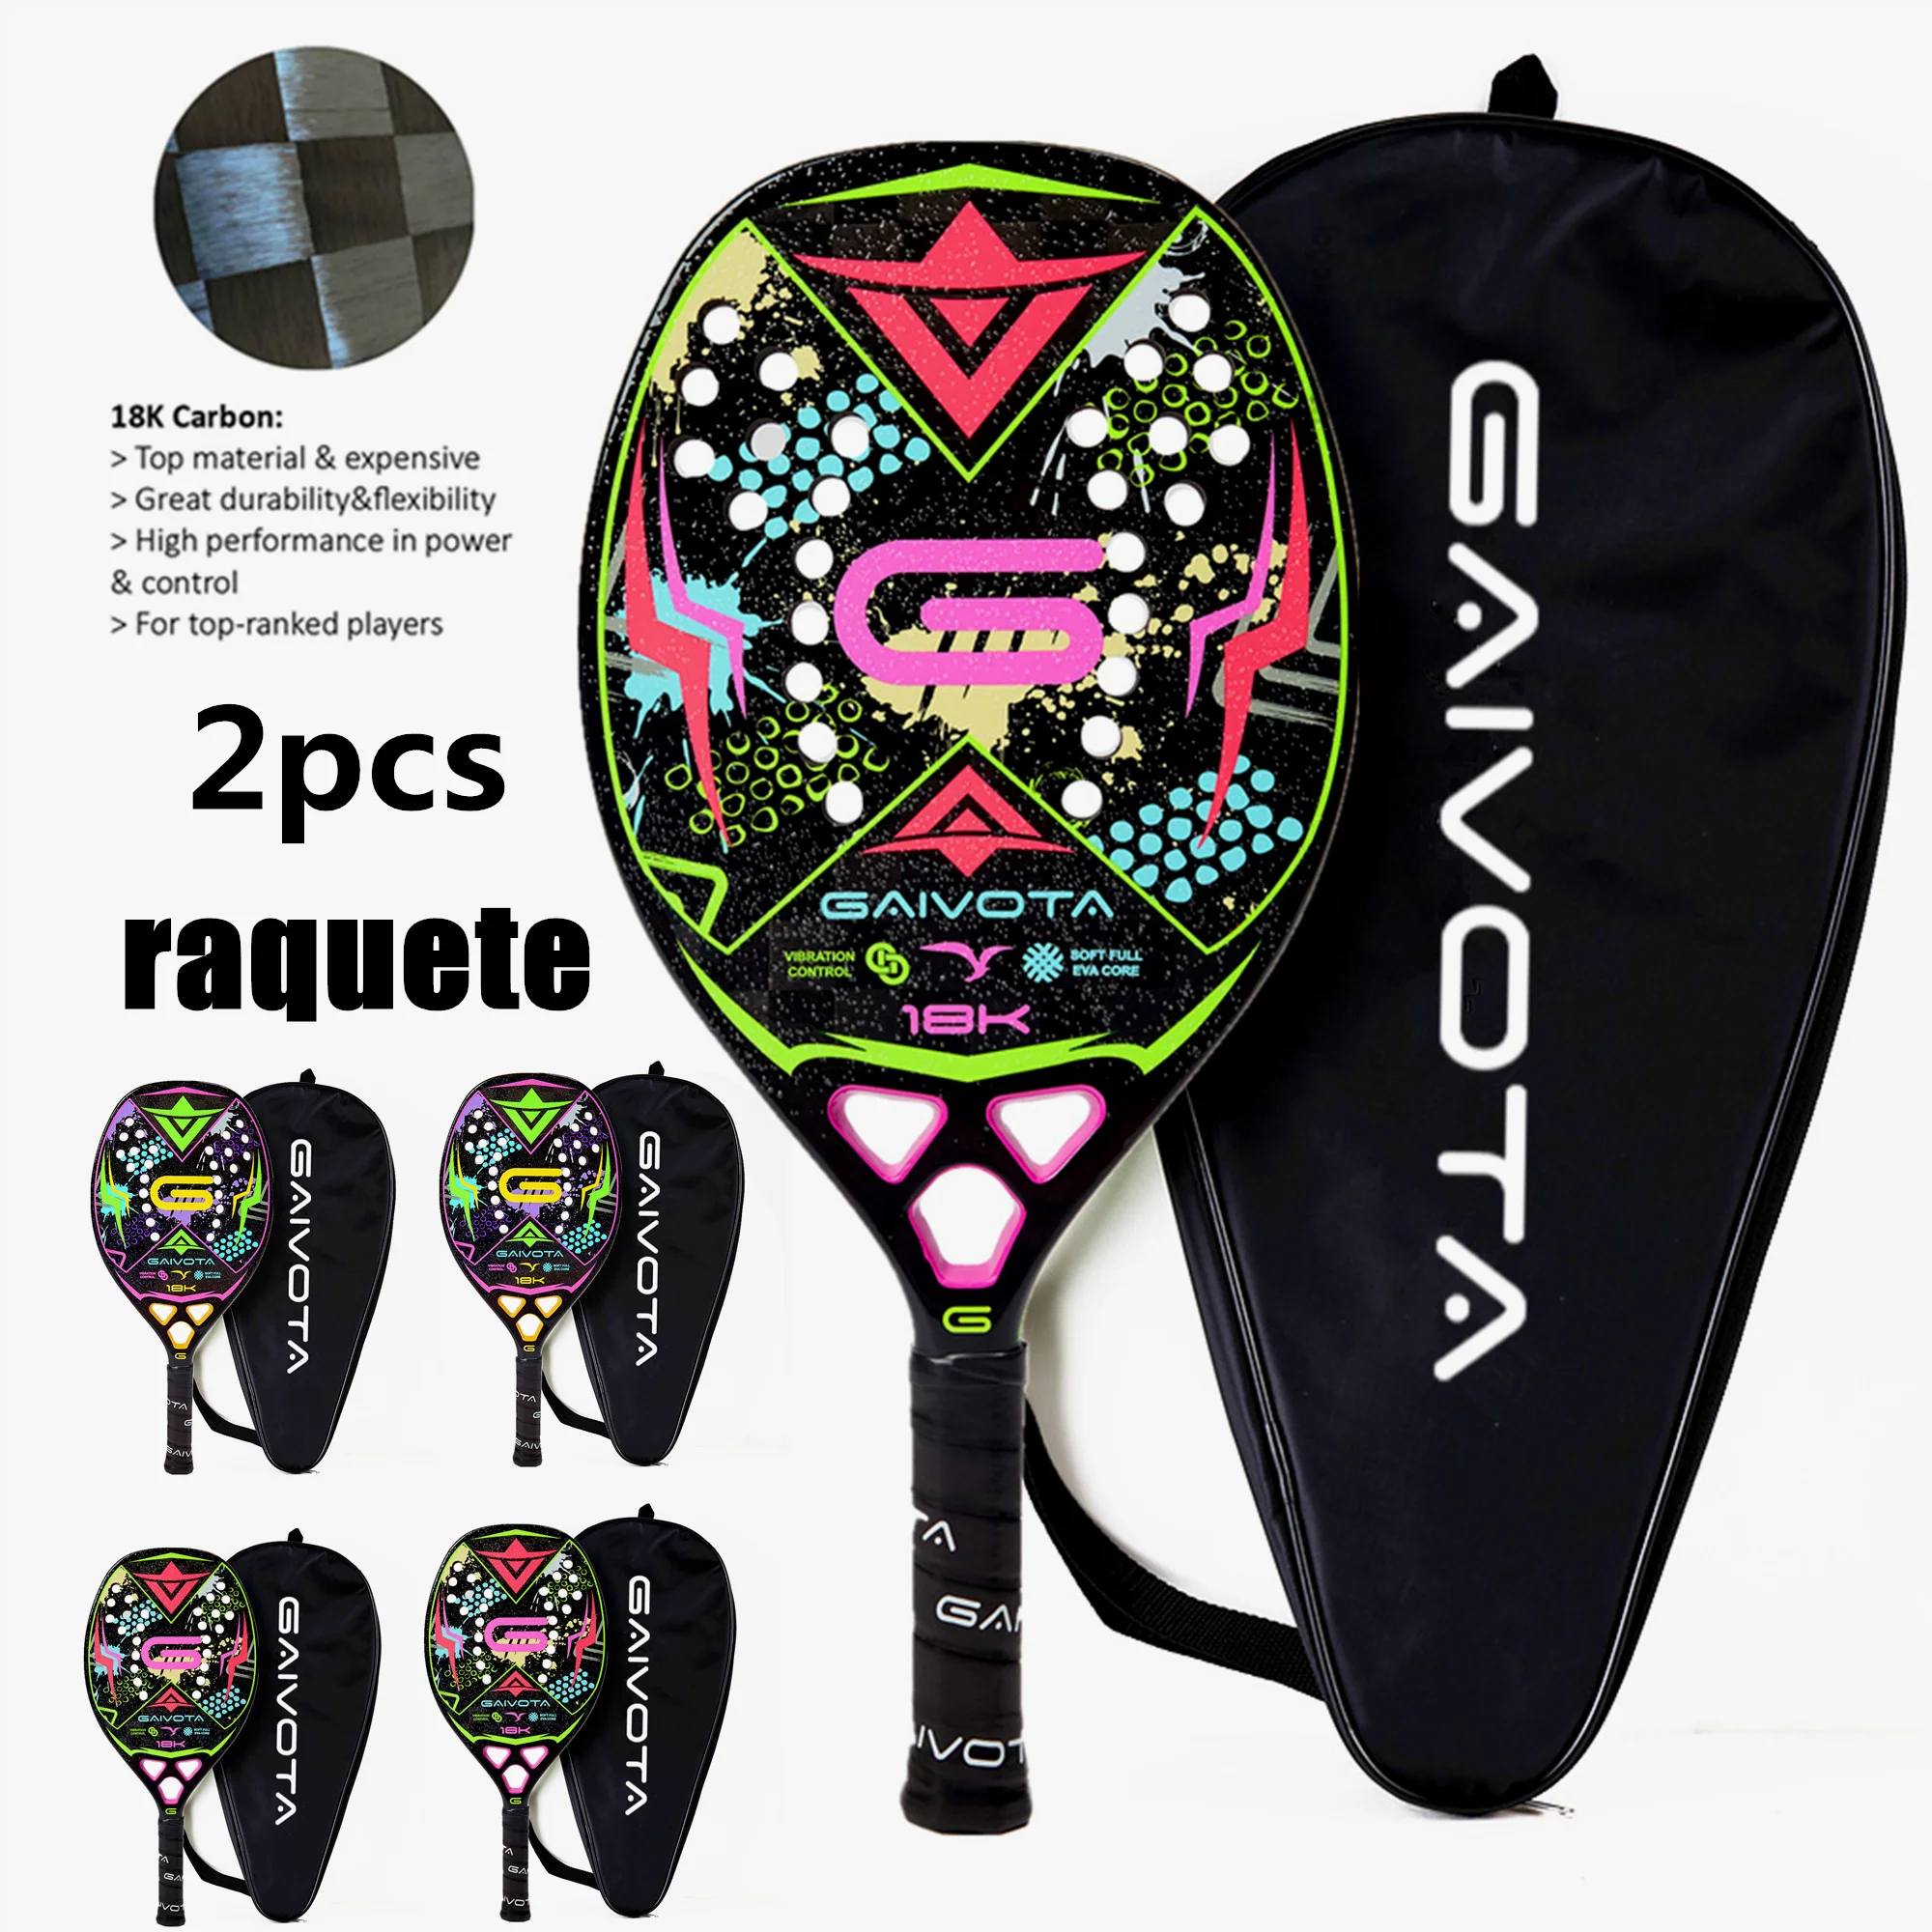 GAIVOTA Color Series 18K Carbon Fiber Beach Tennis Racket Frosted Beach Tennis Racket with Backpack - 2pcs racket